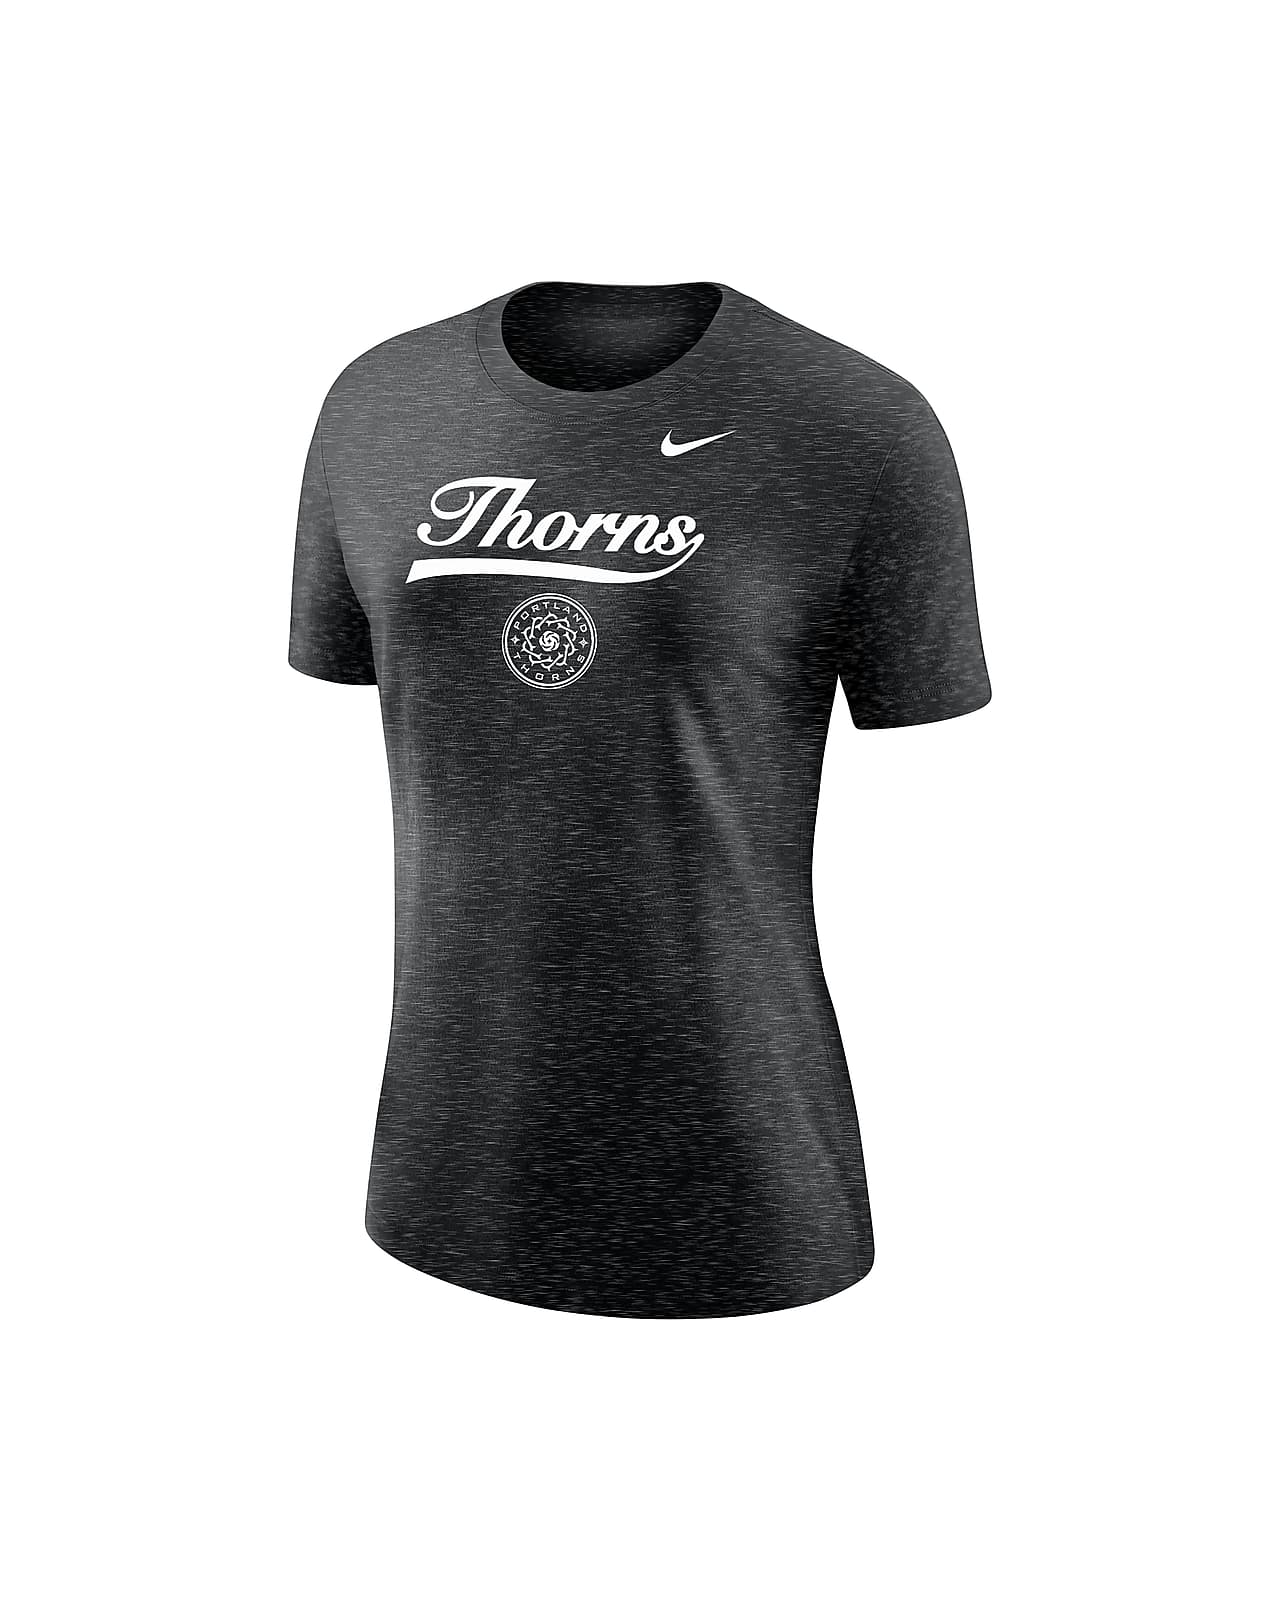 Portland Thorns Women's Nike Soccer Varsity T-Shirt